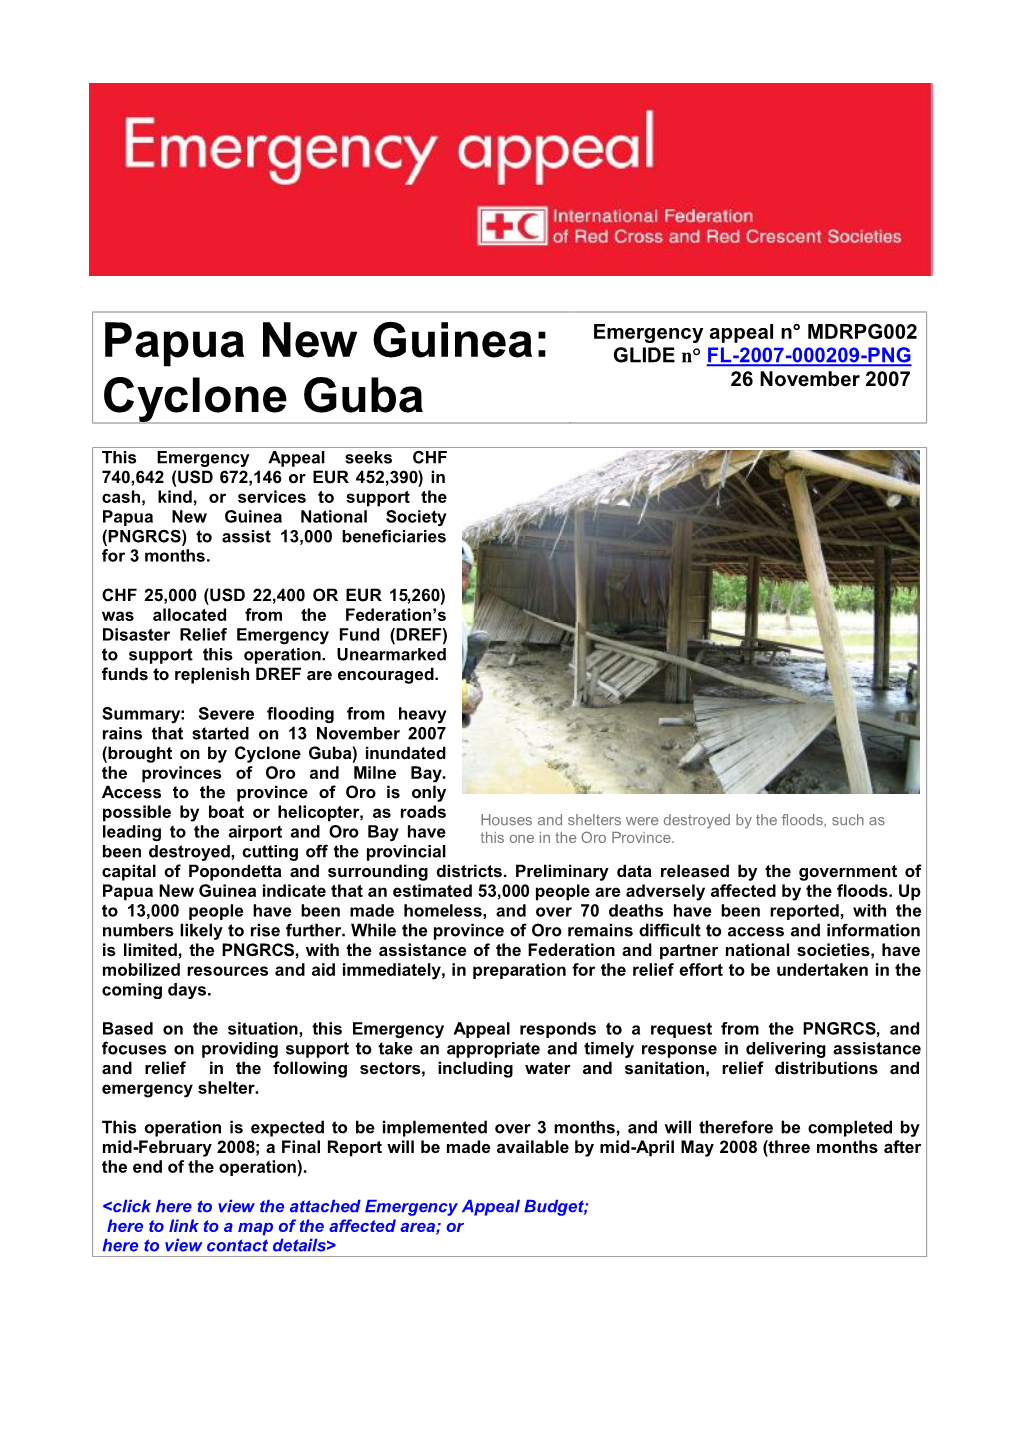 Papua New Guinea: Cyclone Guba, Emergency Appeal 2